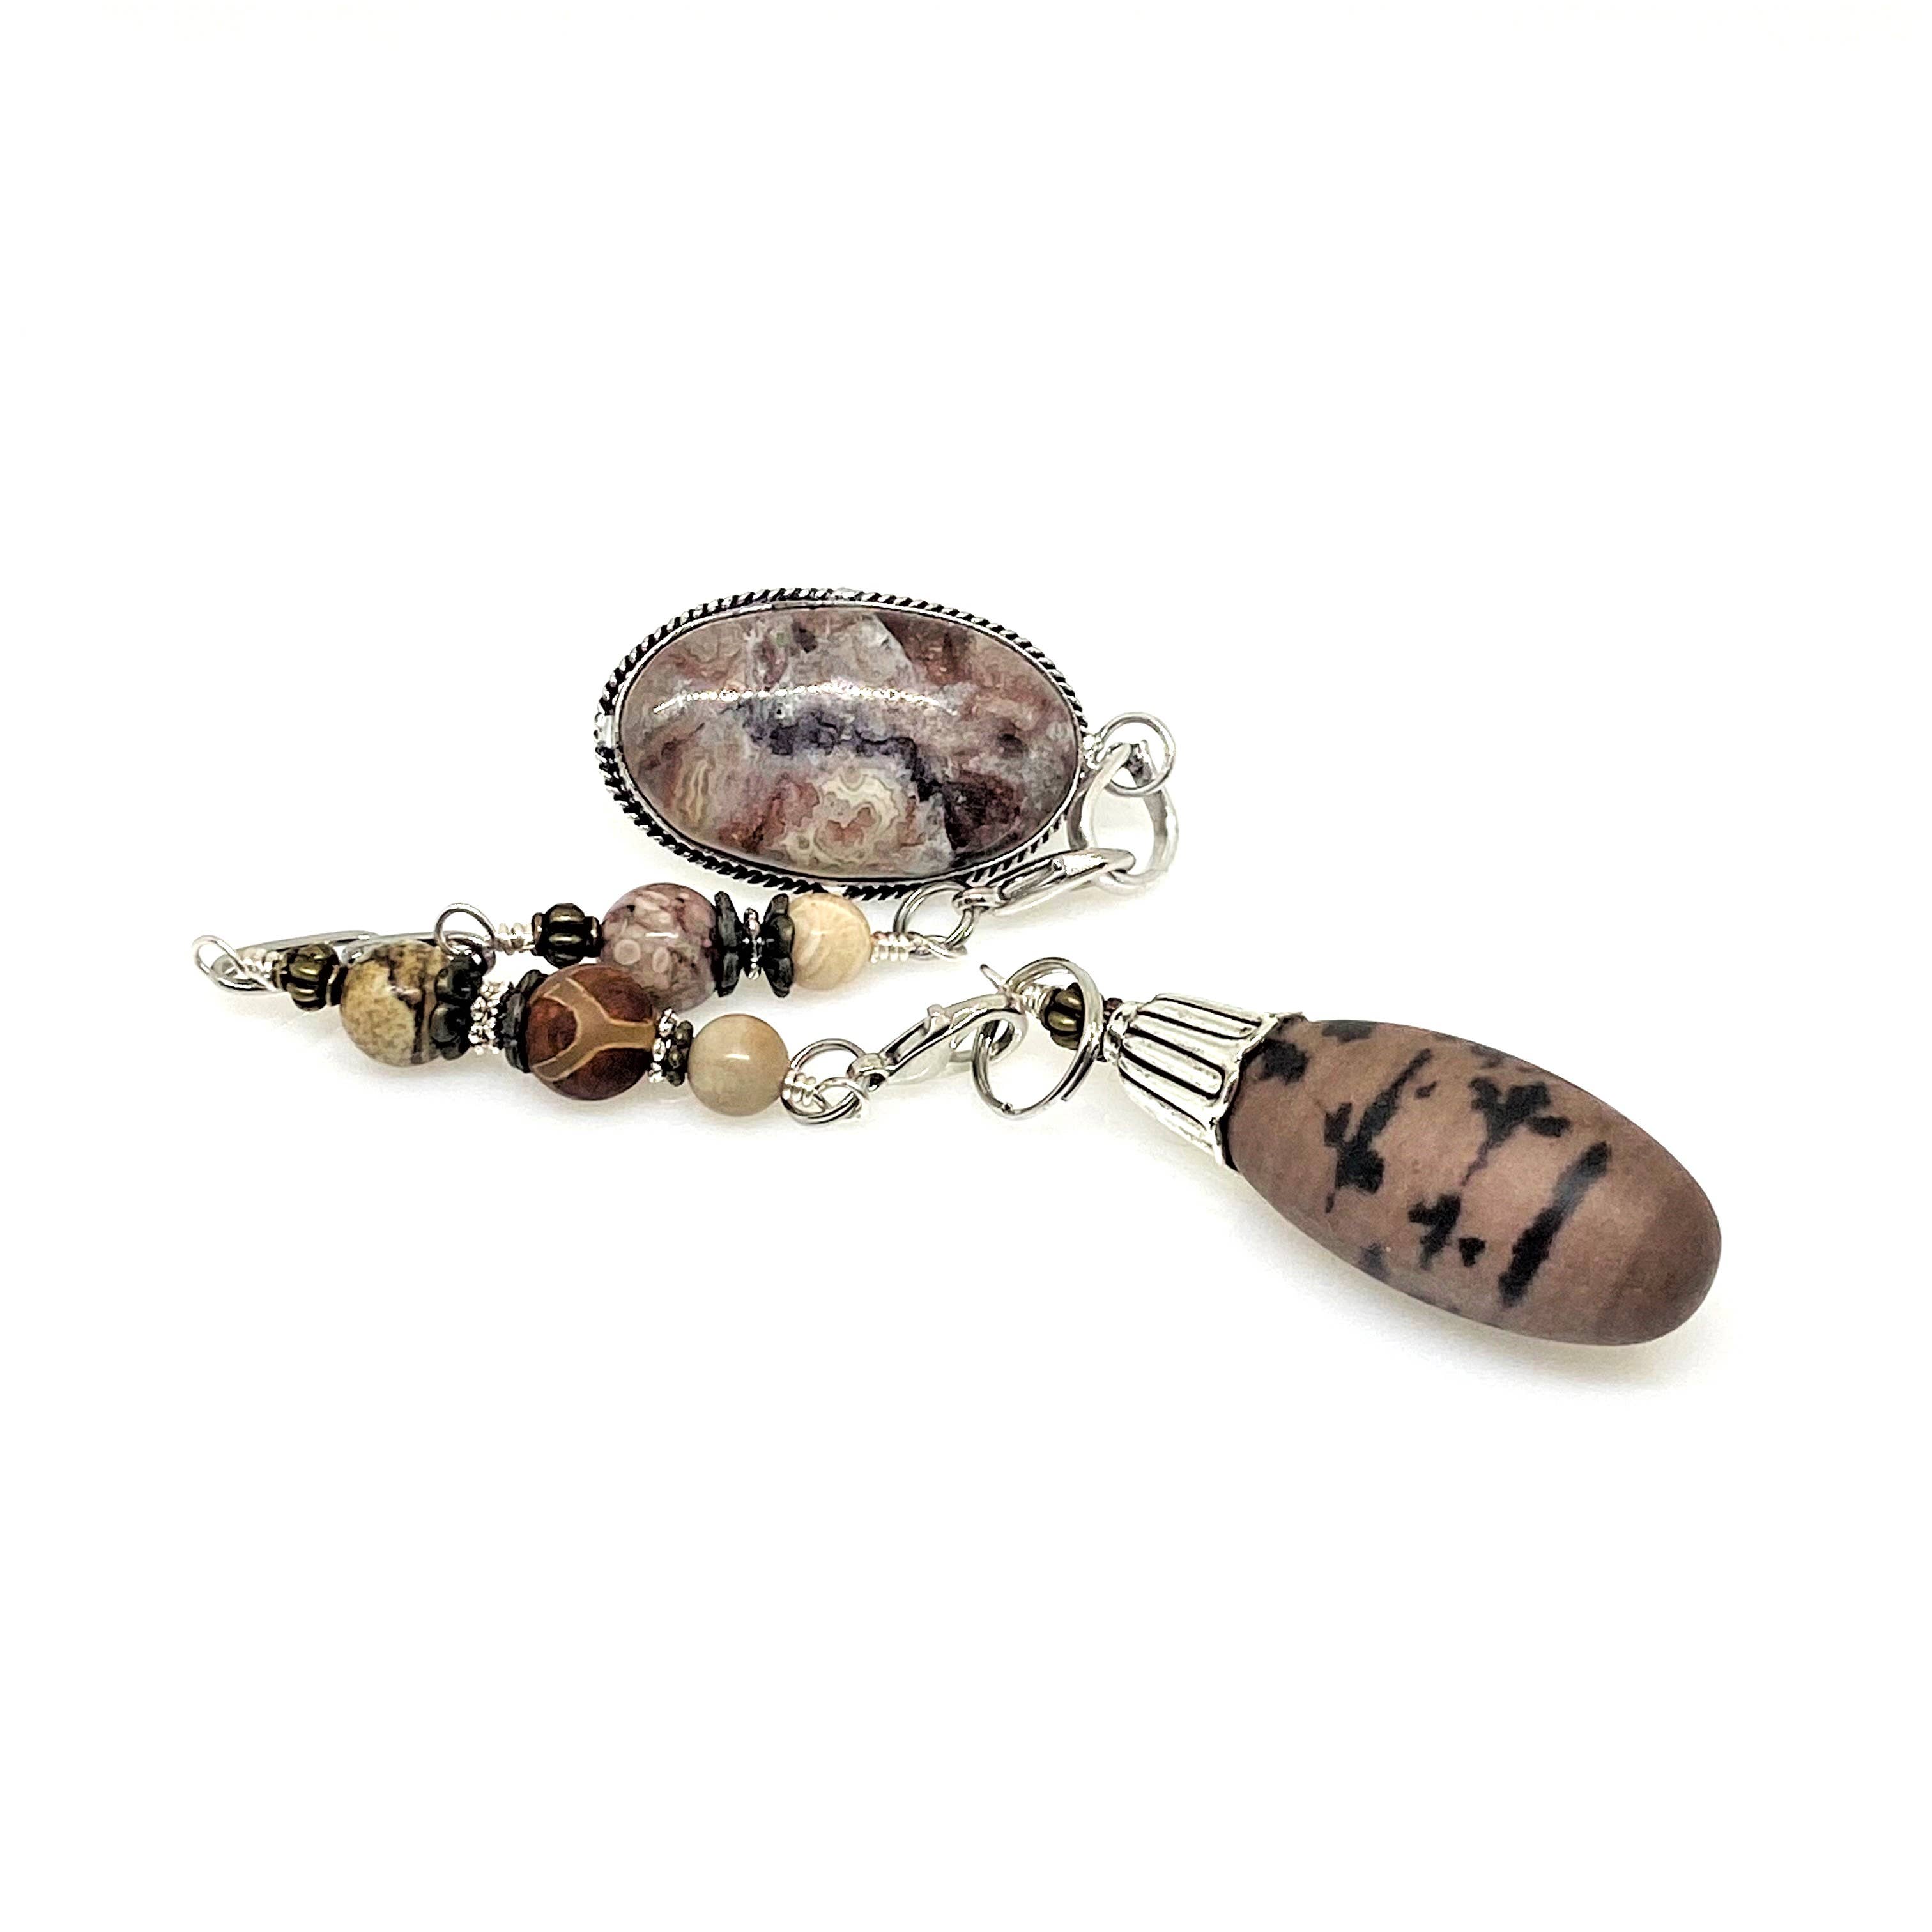 STORi Necklace Holder with Jewelry Tray - Zen Merchandiser